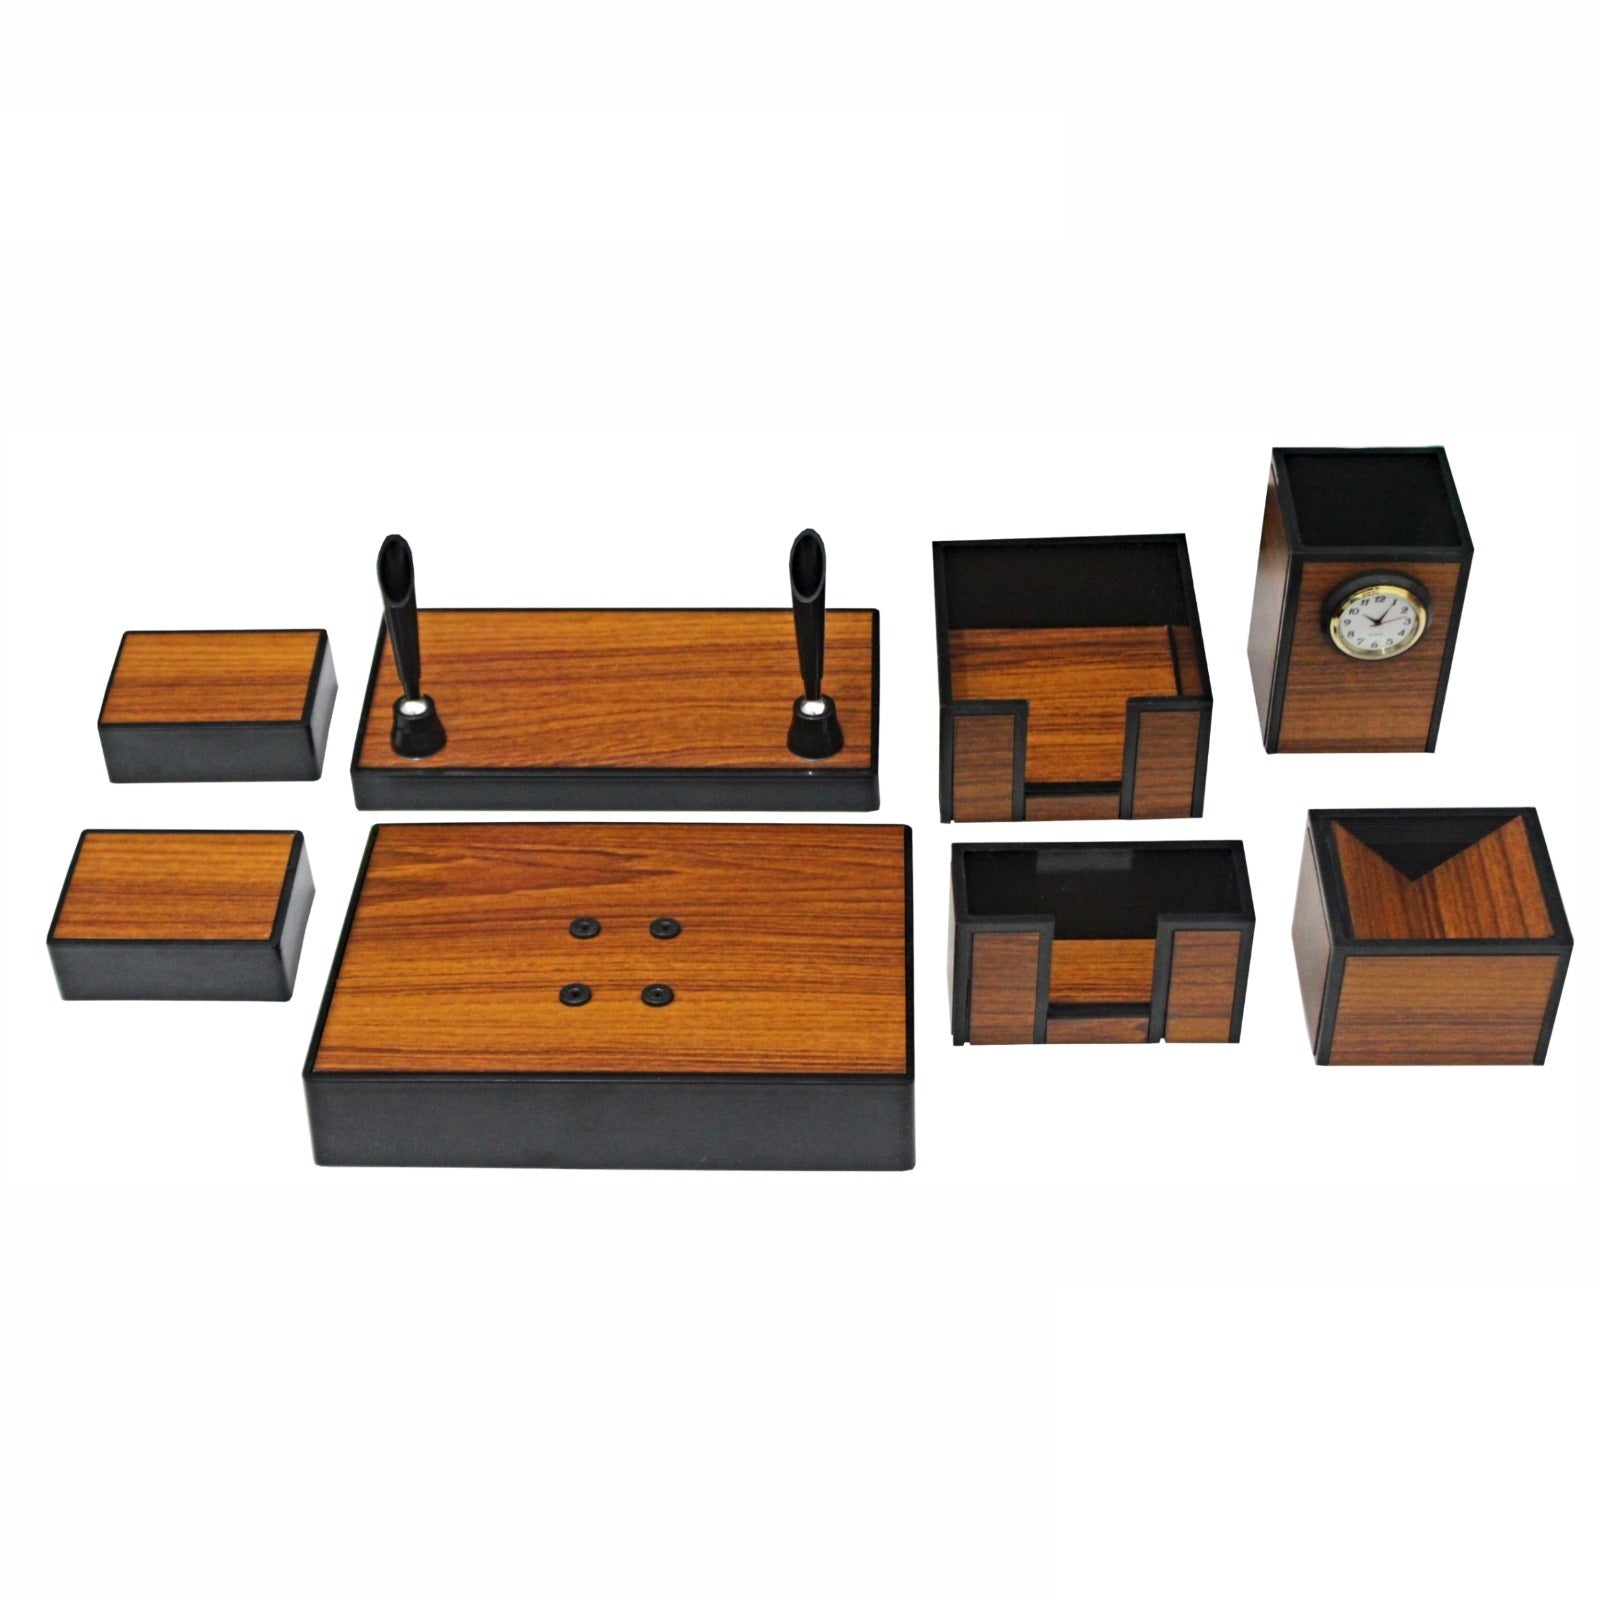 Senator Wooden Table Set With Watch 8pcs Set # 21